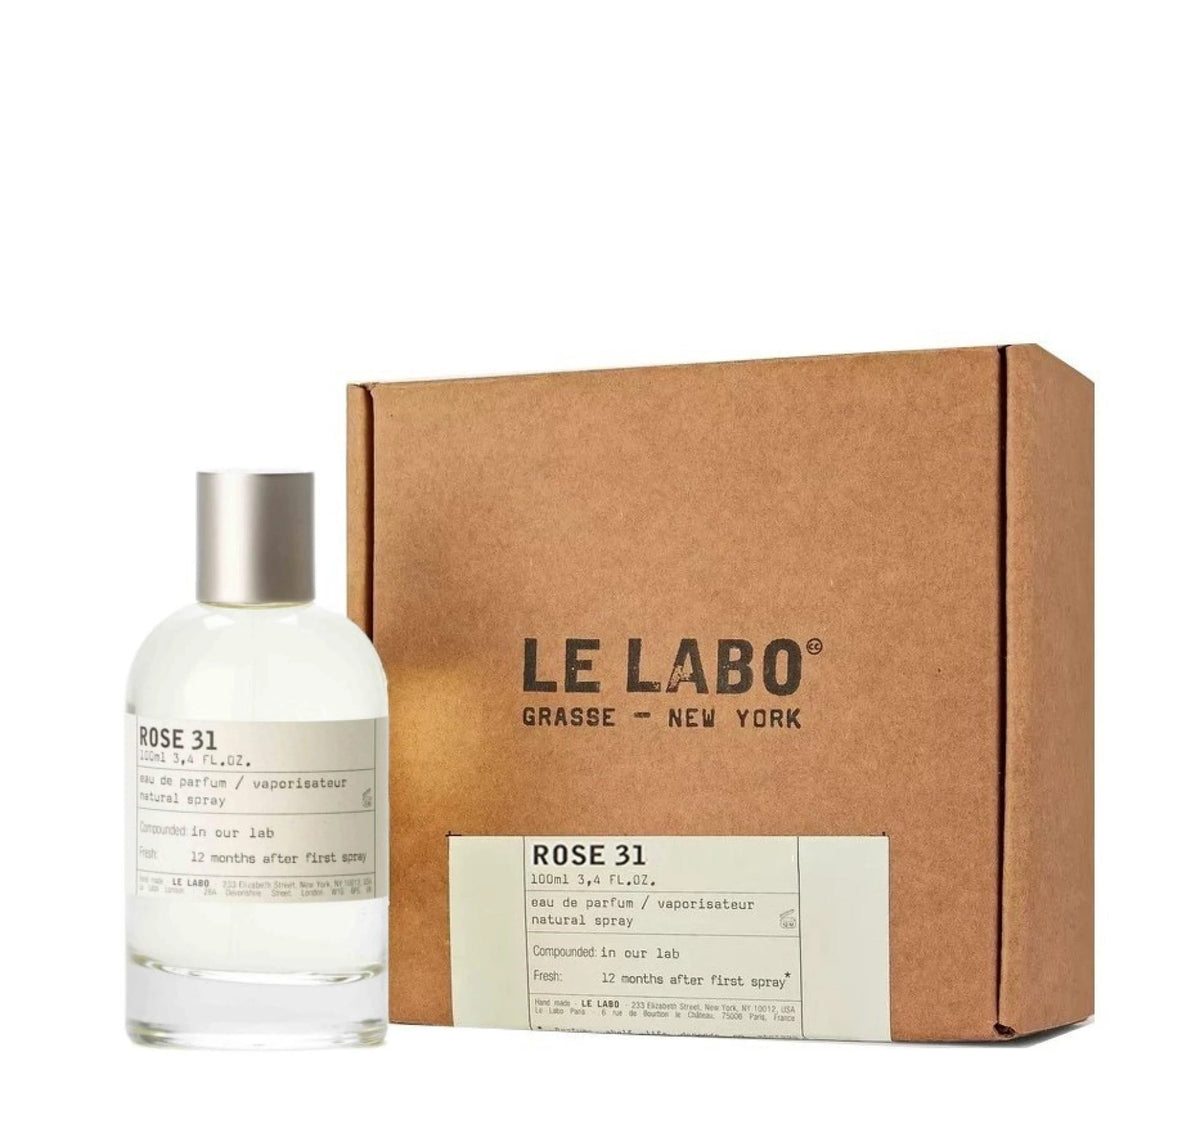 Luxuries Designer MEN WOMEN Perfume California Dream/ Les Sables Rose/  Apogee/ Eau De Parfum Spray 3.4 Oz/100 Ml Unisex Fragrance Body Mist Fast  Ship From Luxuryperfume88, $21.89